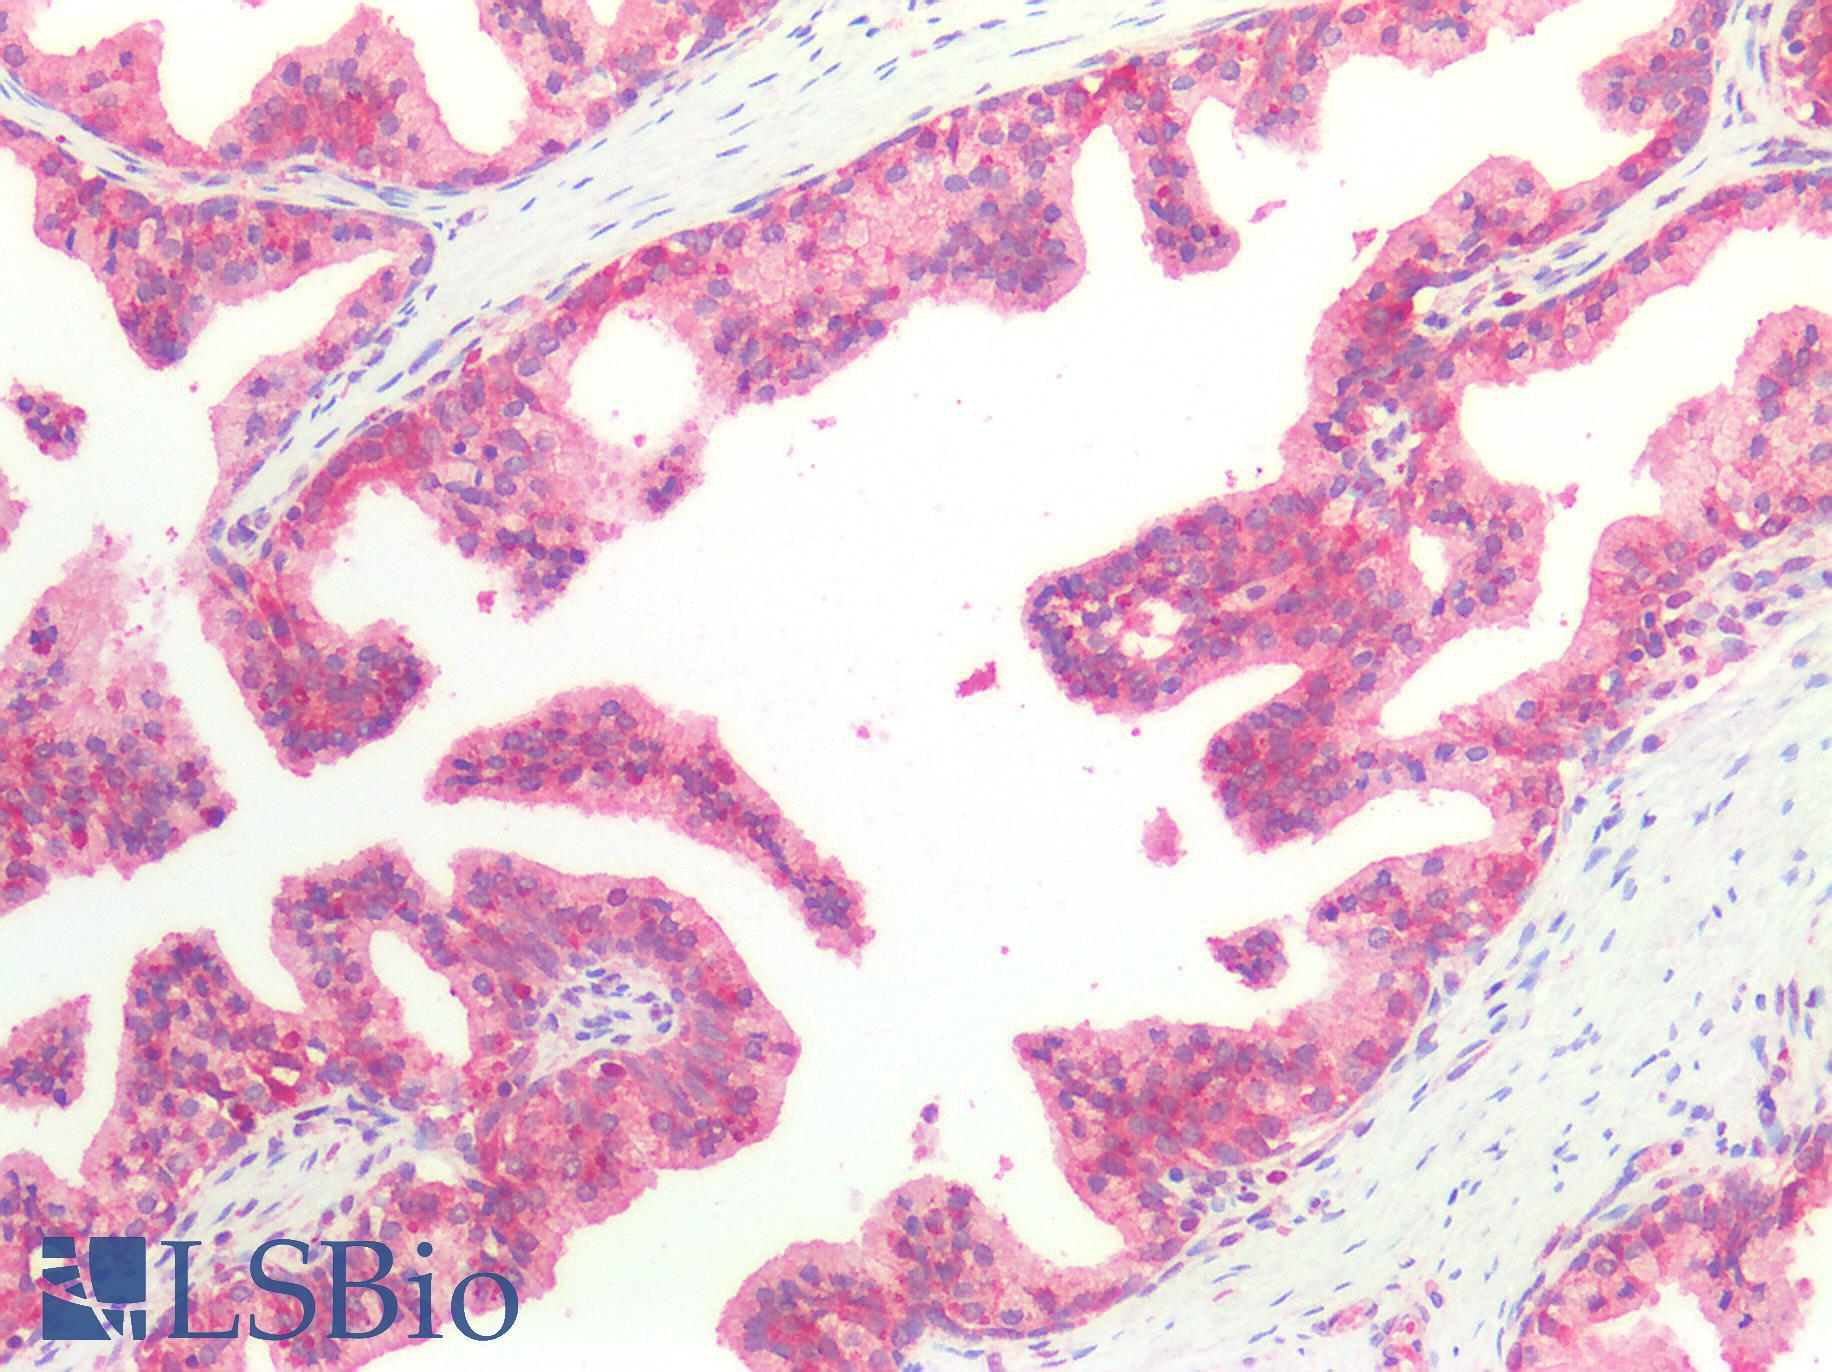 HSPA8 / HSC70 Antibody - Human Prostate: Formalin-Fixed, Paraffin-Embedded (FFPE)